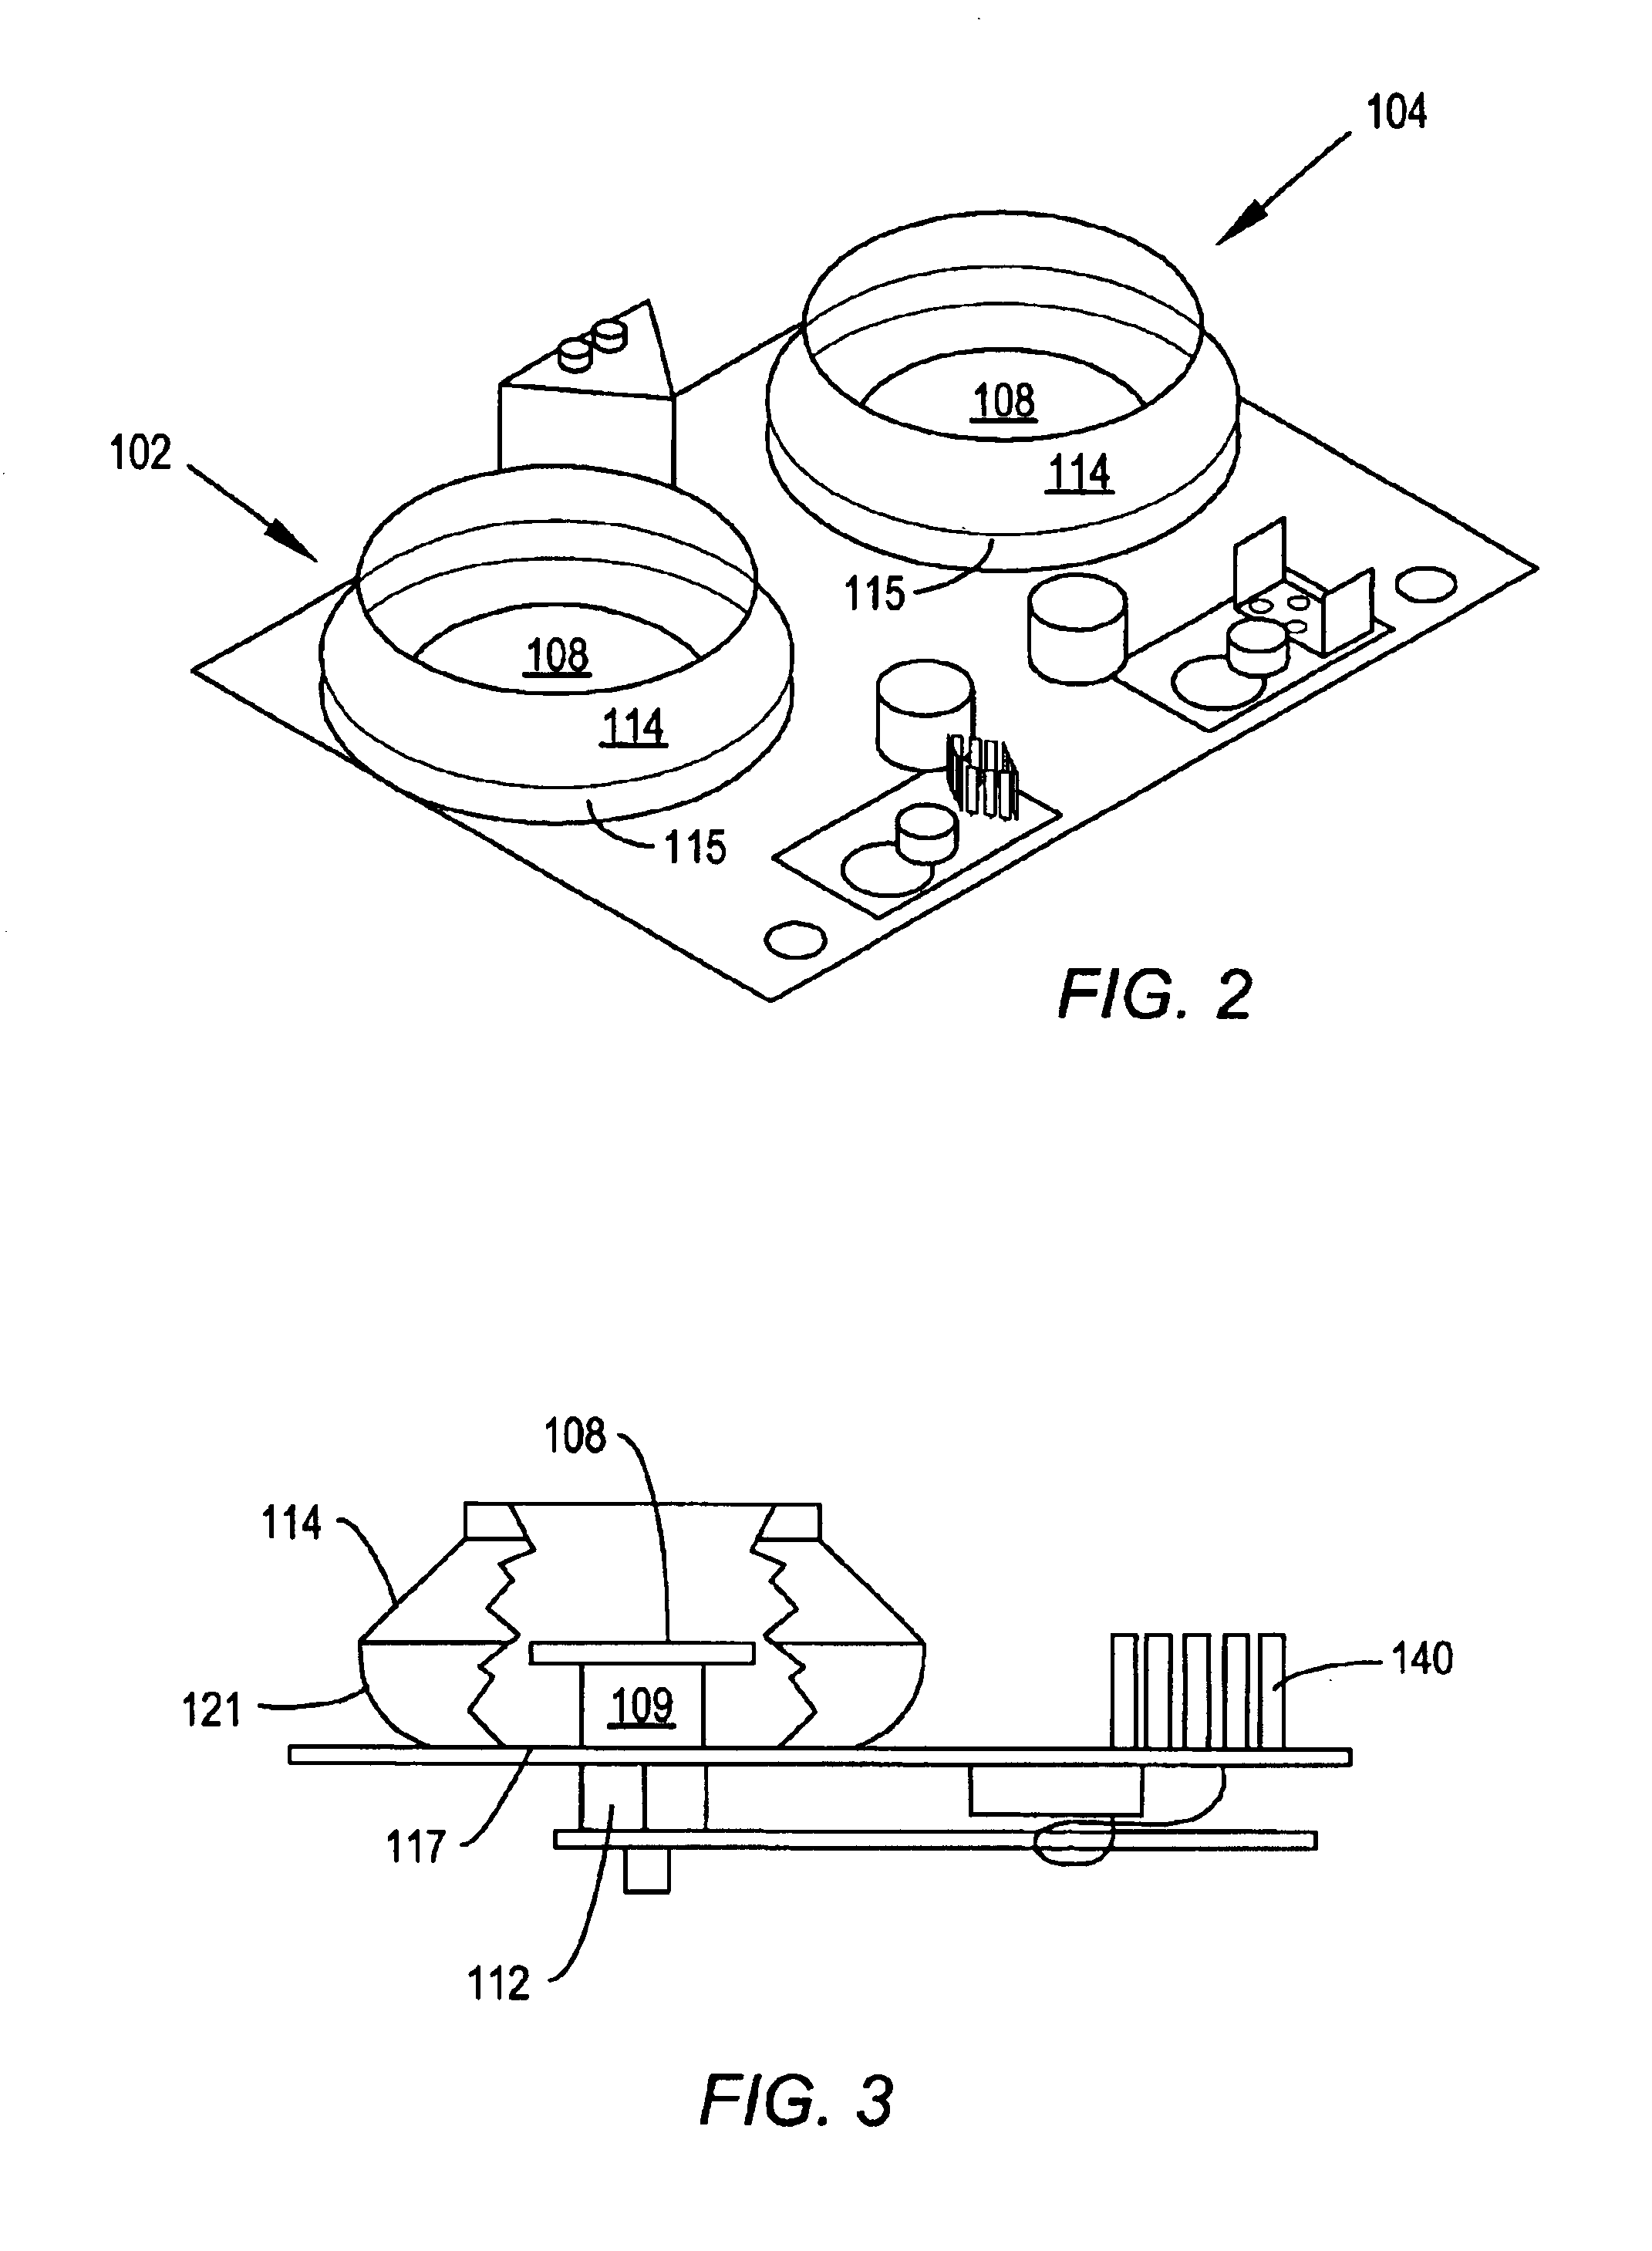 Apparatus for preparing multiple eyeglass lenses